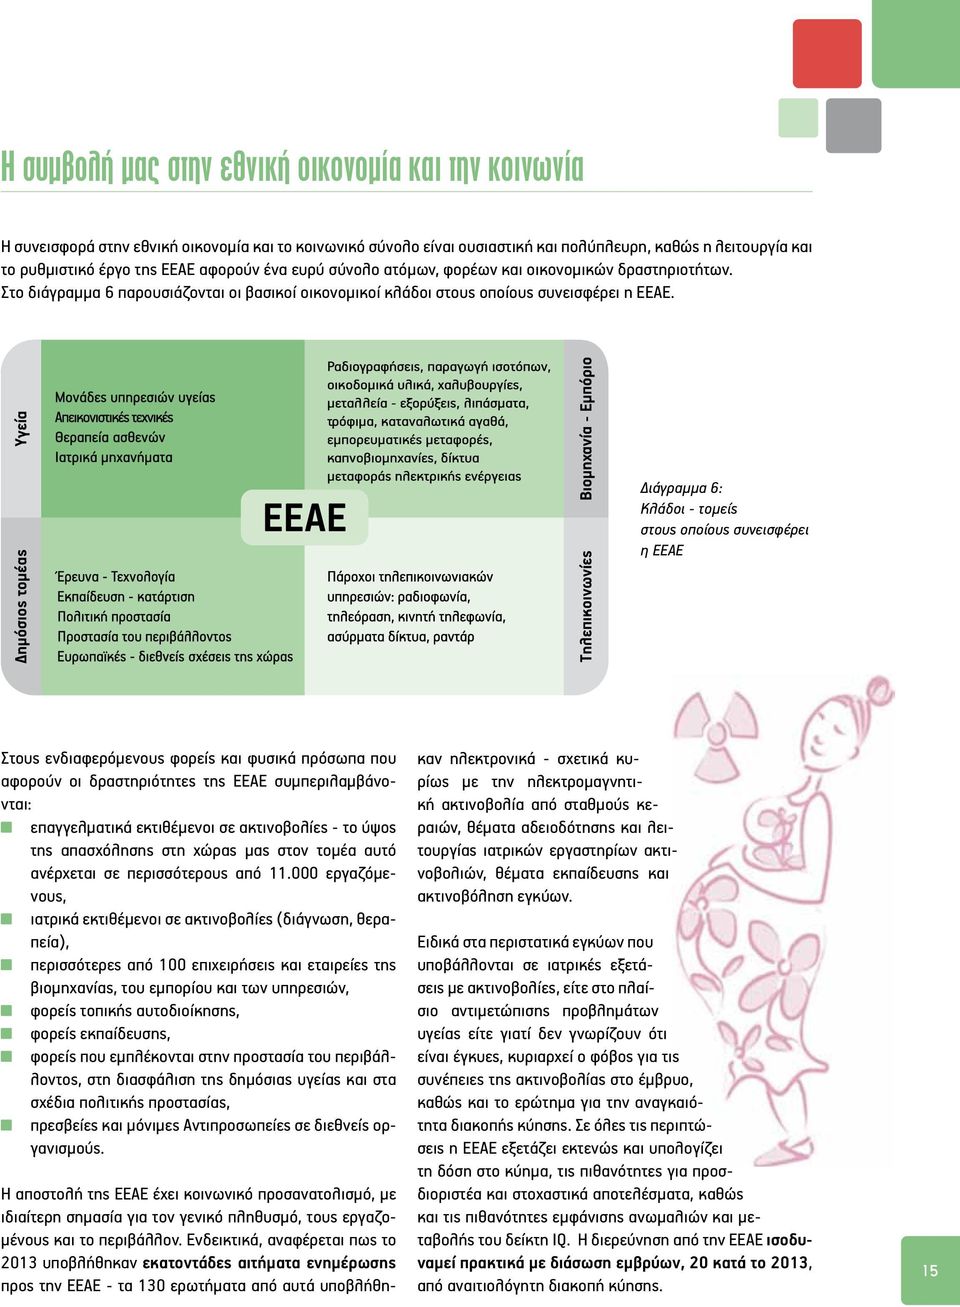 EEAE Διάγραμμα 6: Κλάδοι - τομείς στους οποίους συνεισφέρει η ΕΕΑΕ Στους ενδιαφερόμενους φορείς και φυσικά πρόσωπα που αφορούν οι δραστηριότητες της ΕΕΑΕ συμπεριλαμβάνονται: επαγγελματικά εκτιθέμενοι